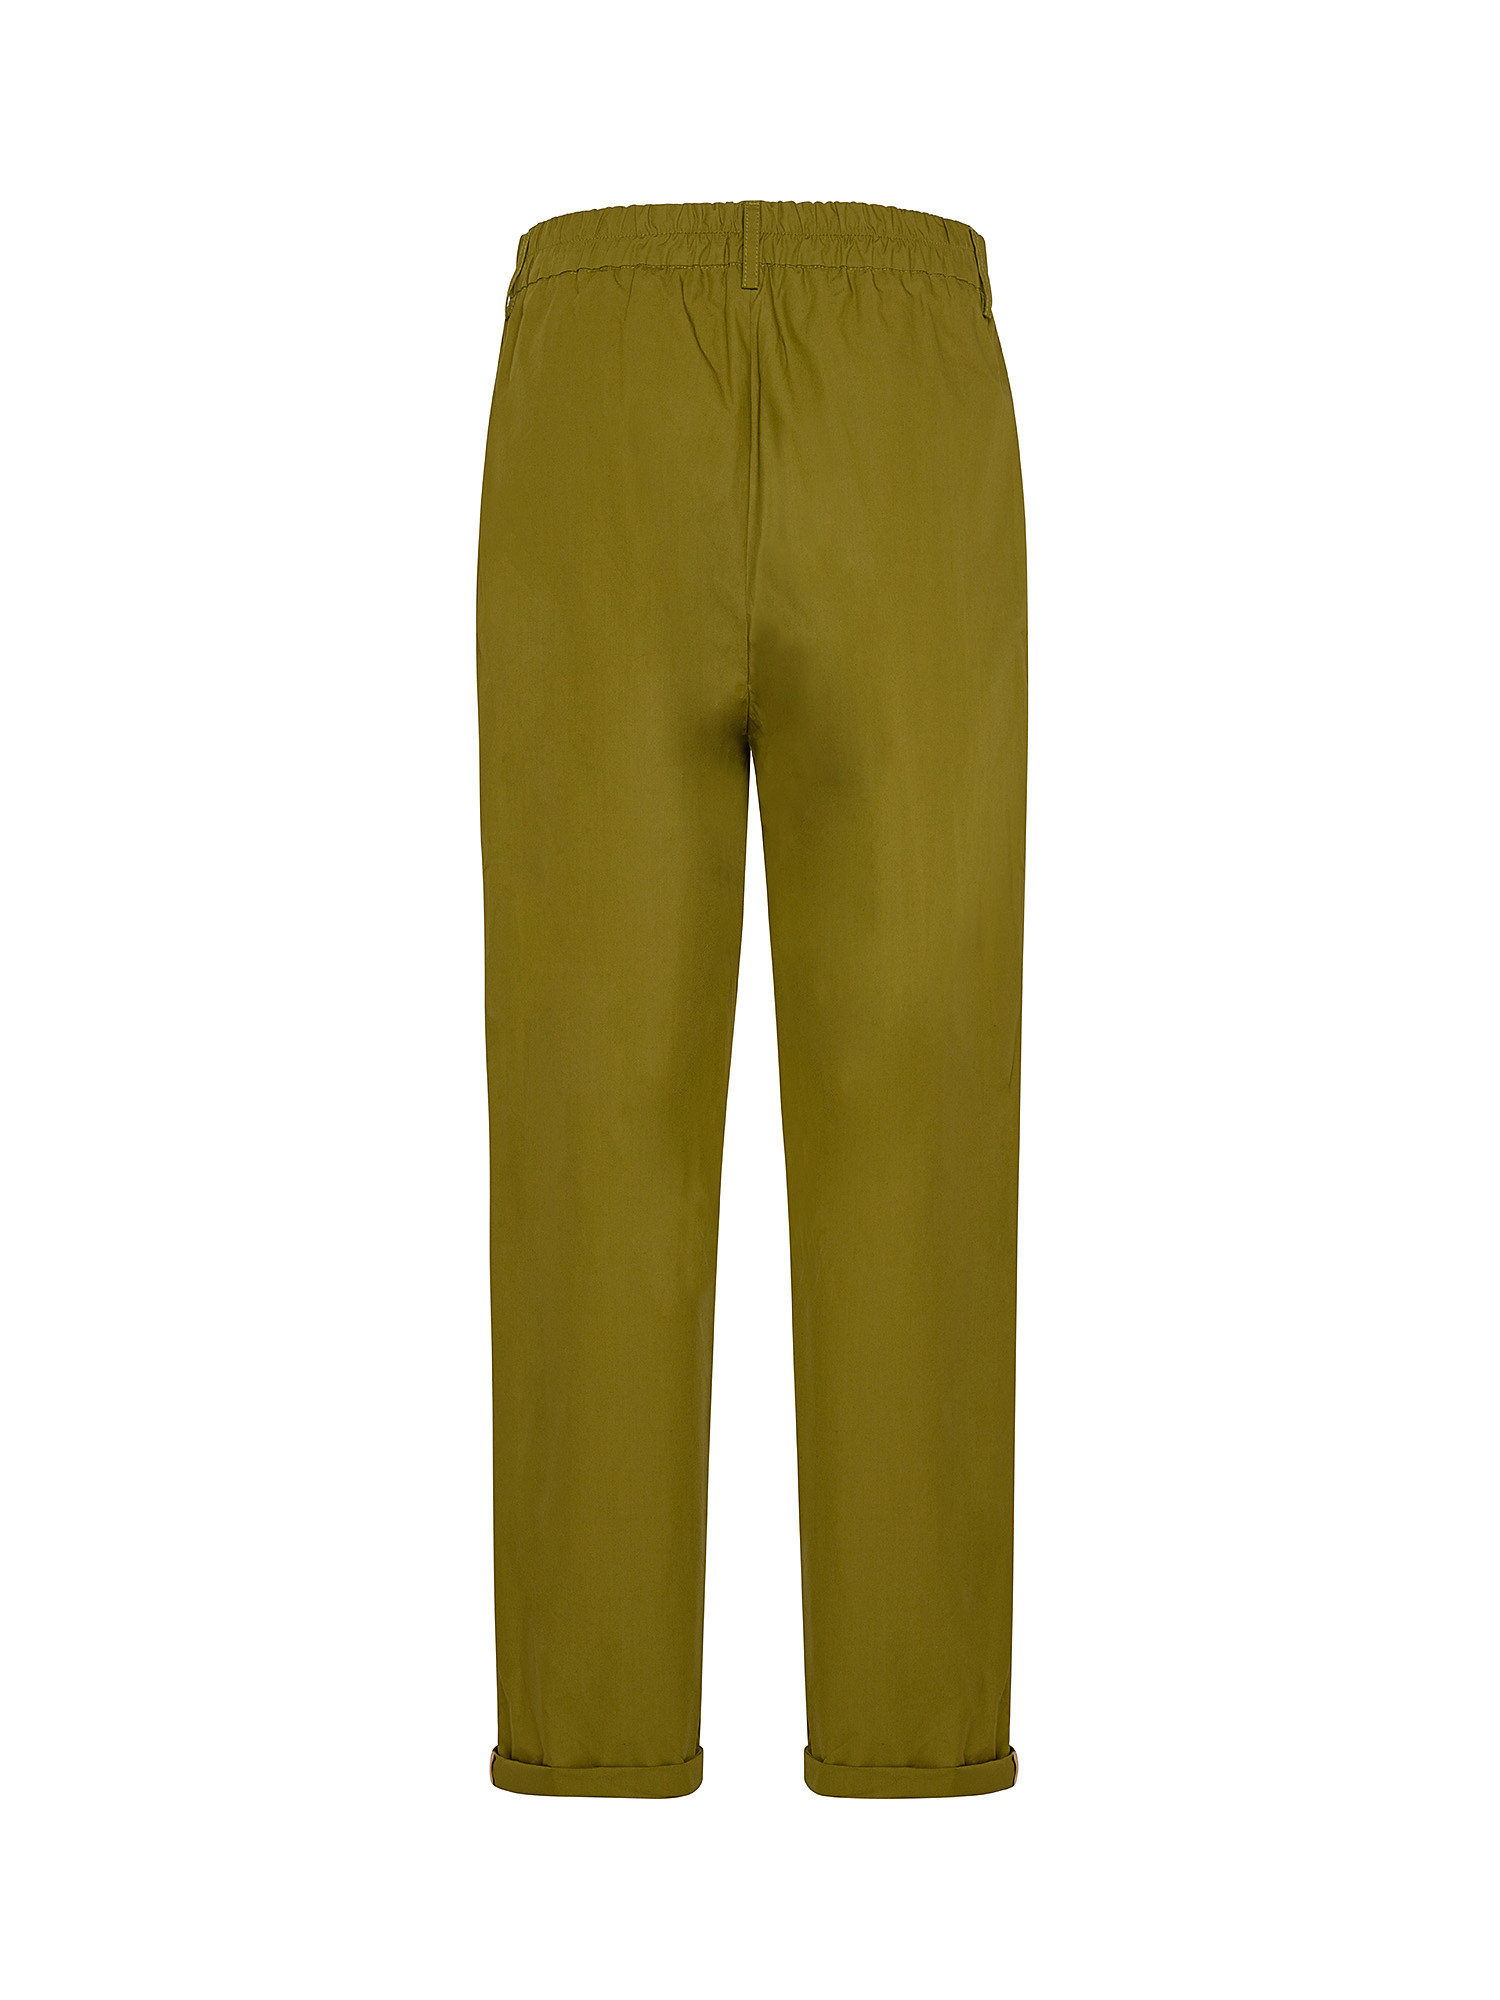 Pantaloni Delaware in popeline di cotone, Verde, large image number 1